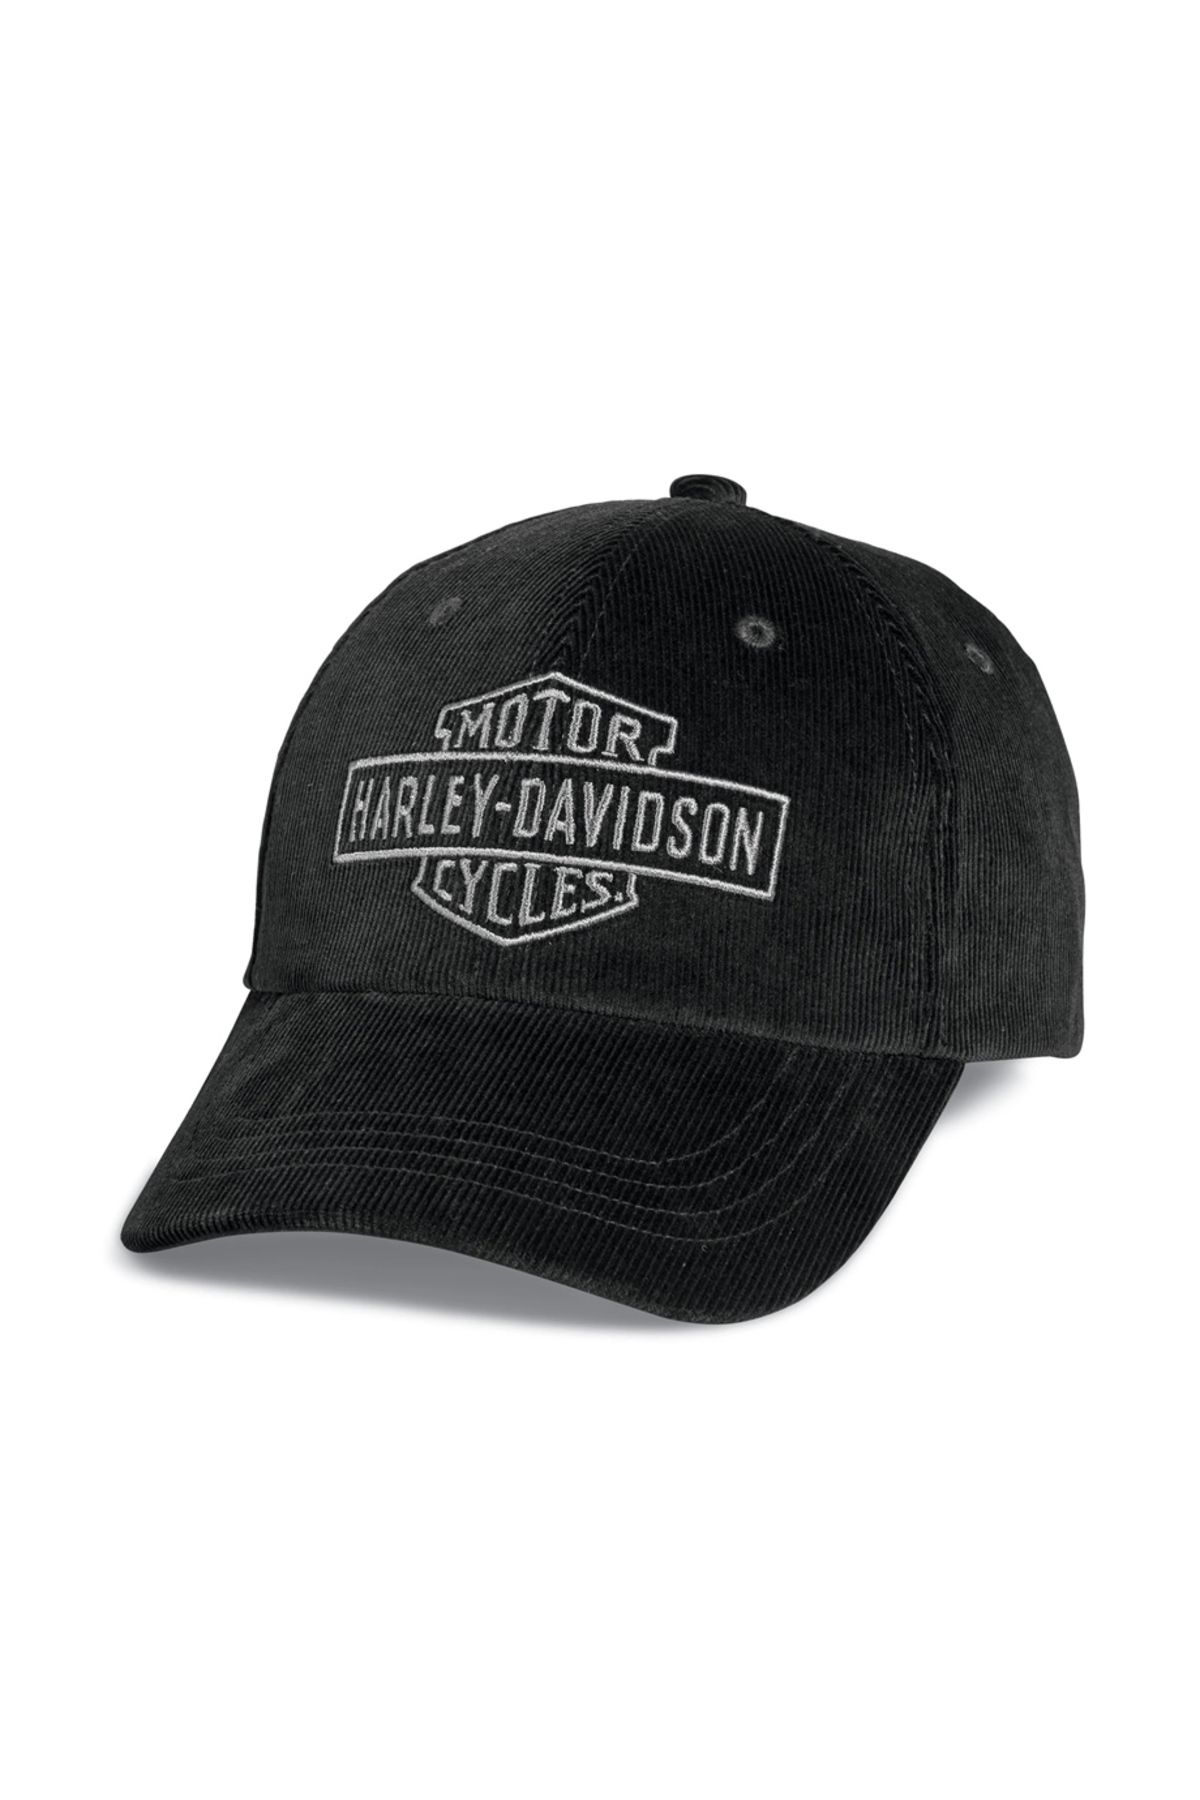 Harley Davidson Harley-davidson Men's Bar & Shield Corduroy Cap - Black